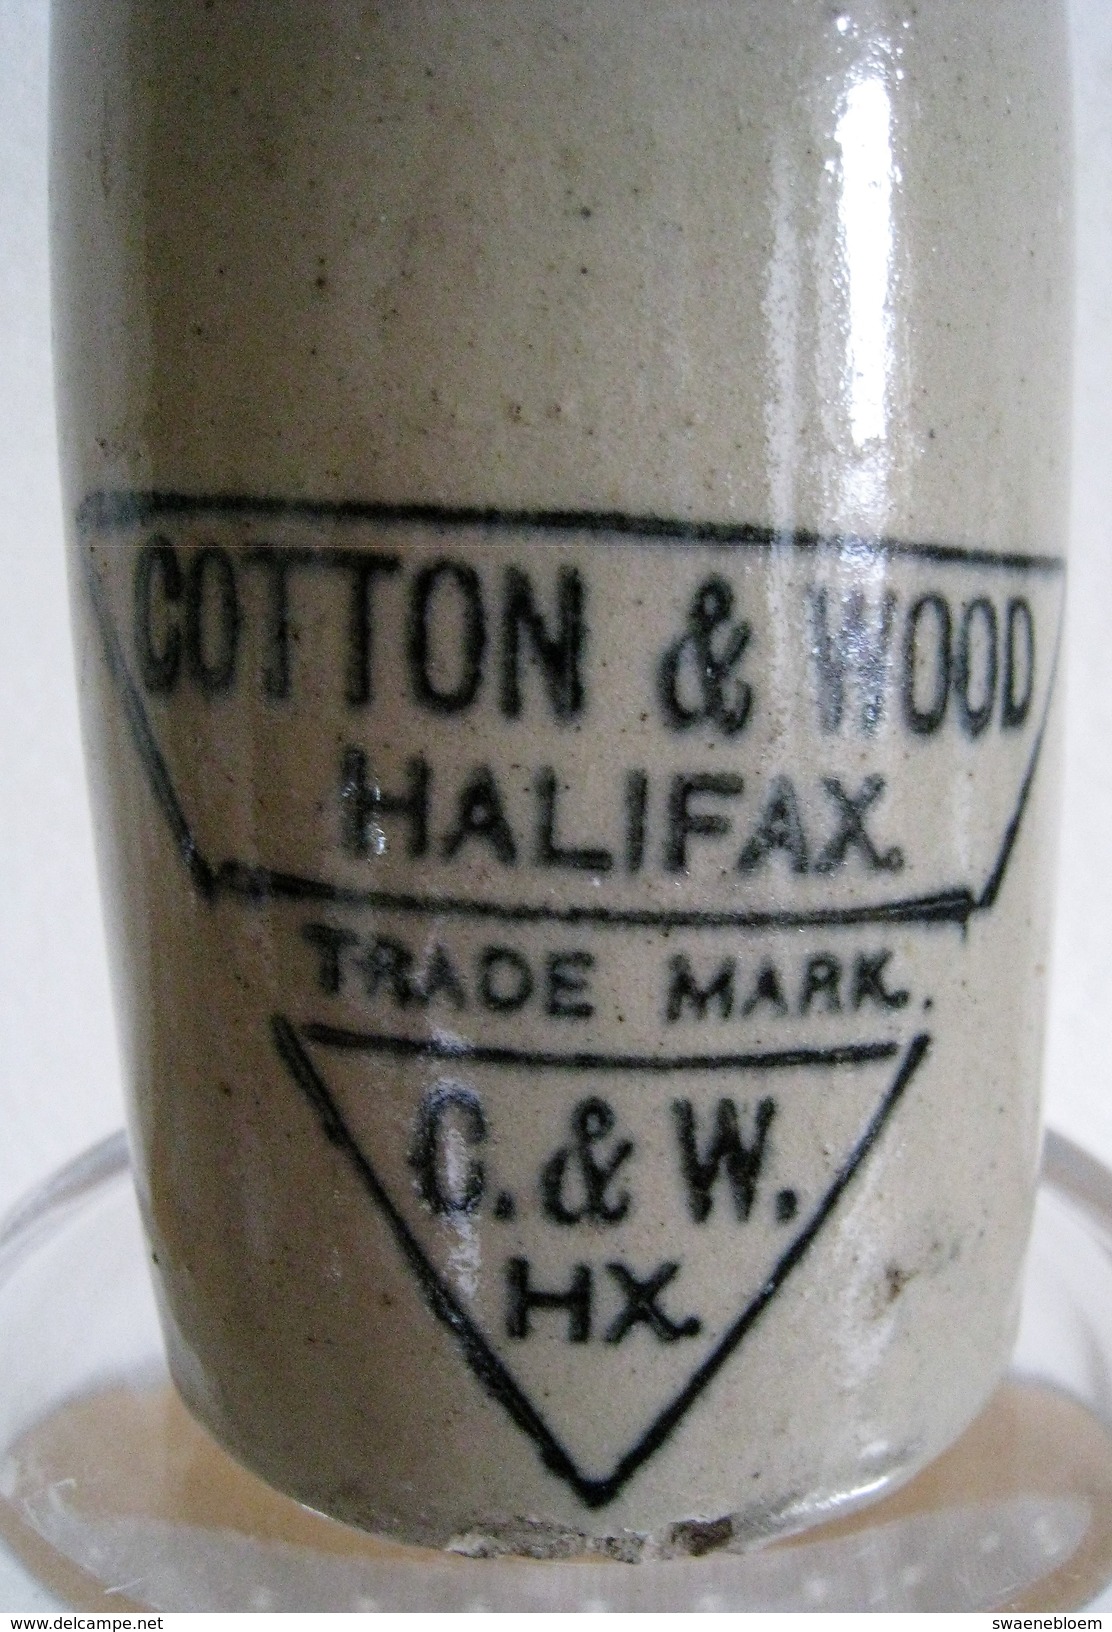 GB.- COTTON & WOOD. HALIFAX. TRADE MARK. C. & W. HX. 4 Scans. - Non Classés